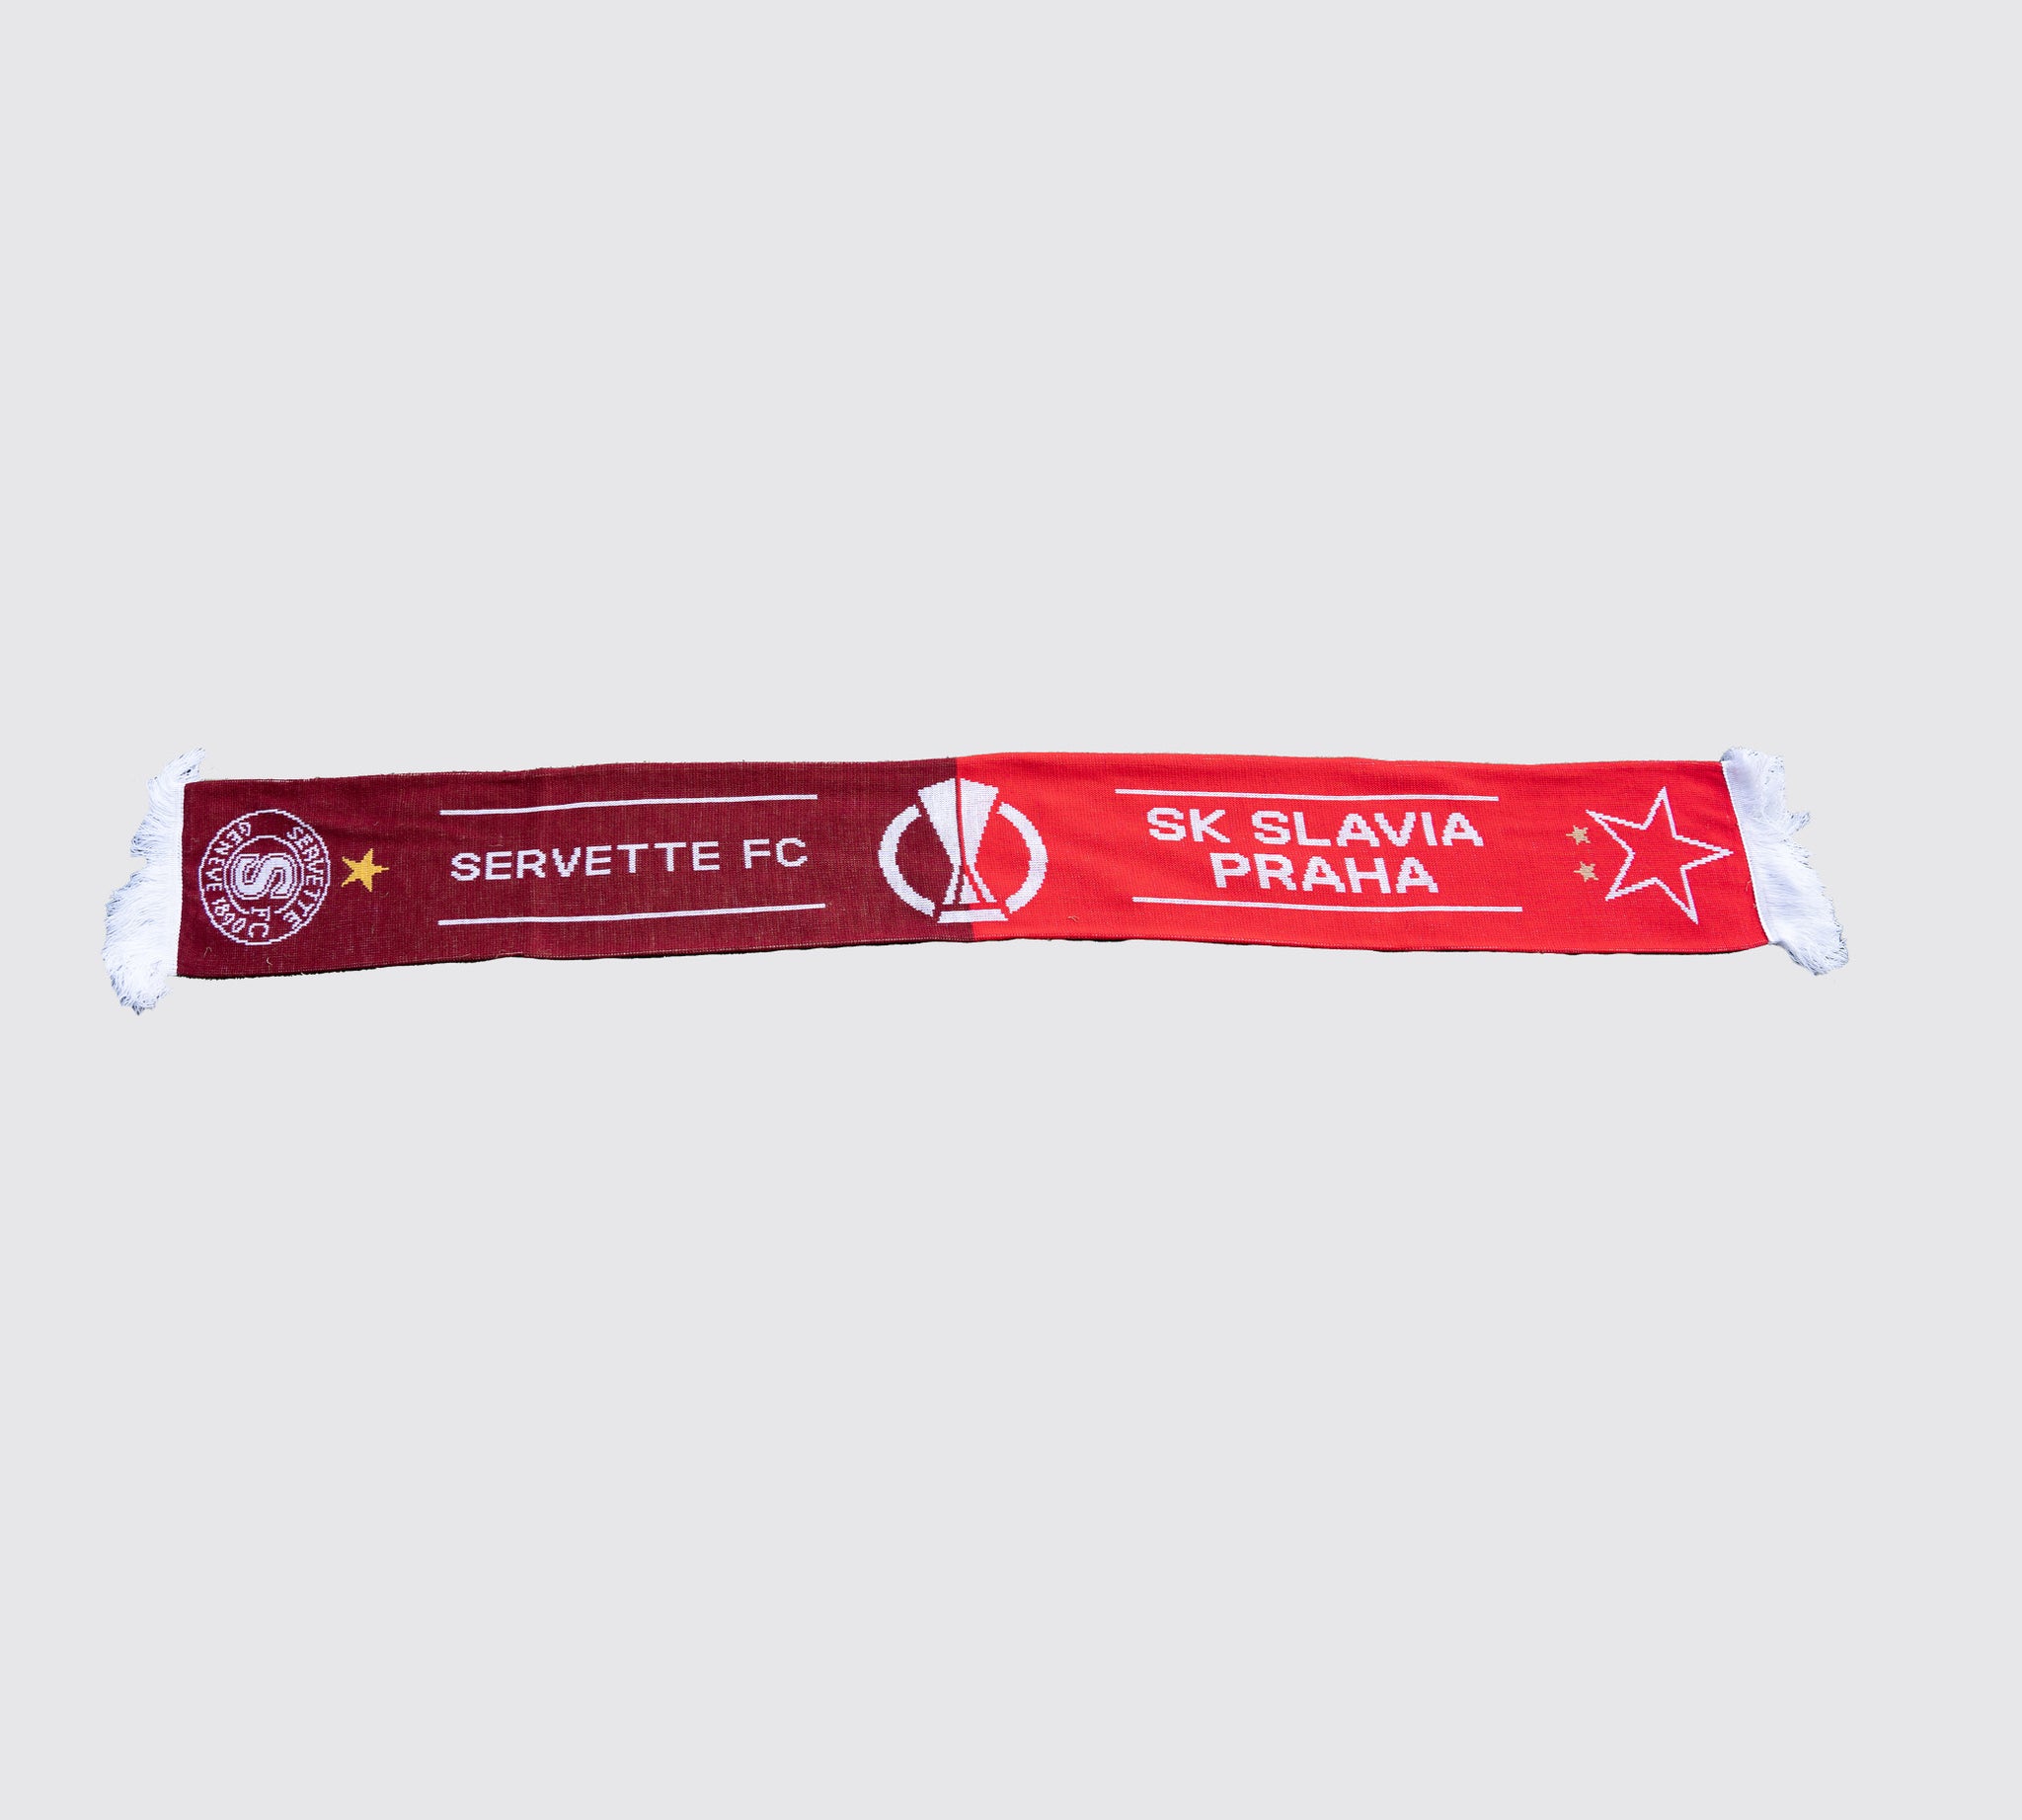 2x Servette FC - SK Slavia Prague